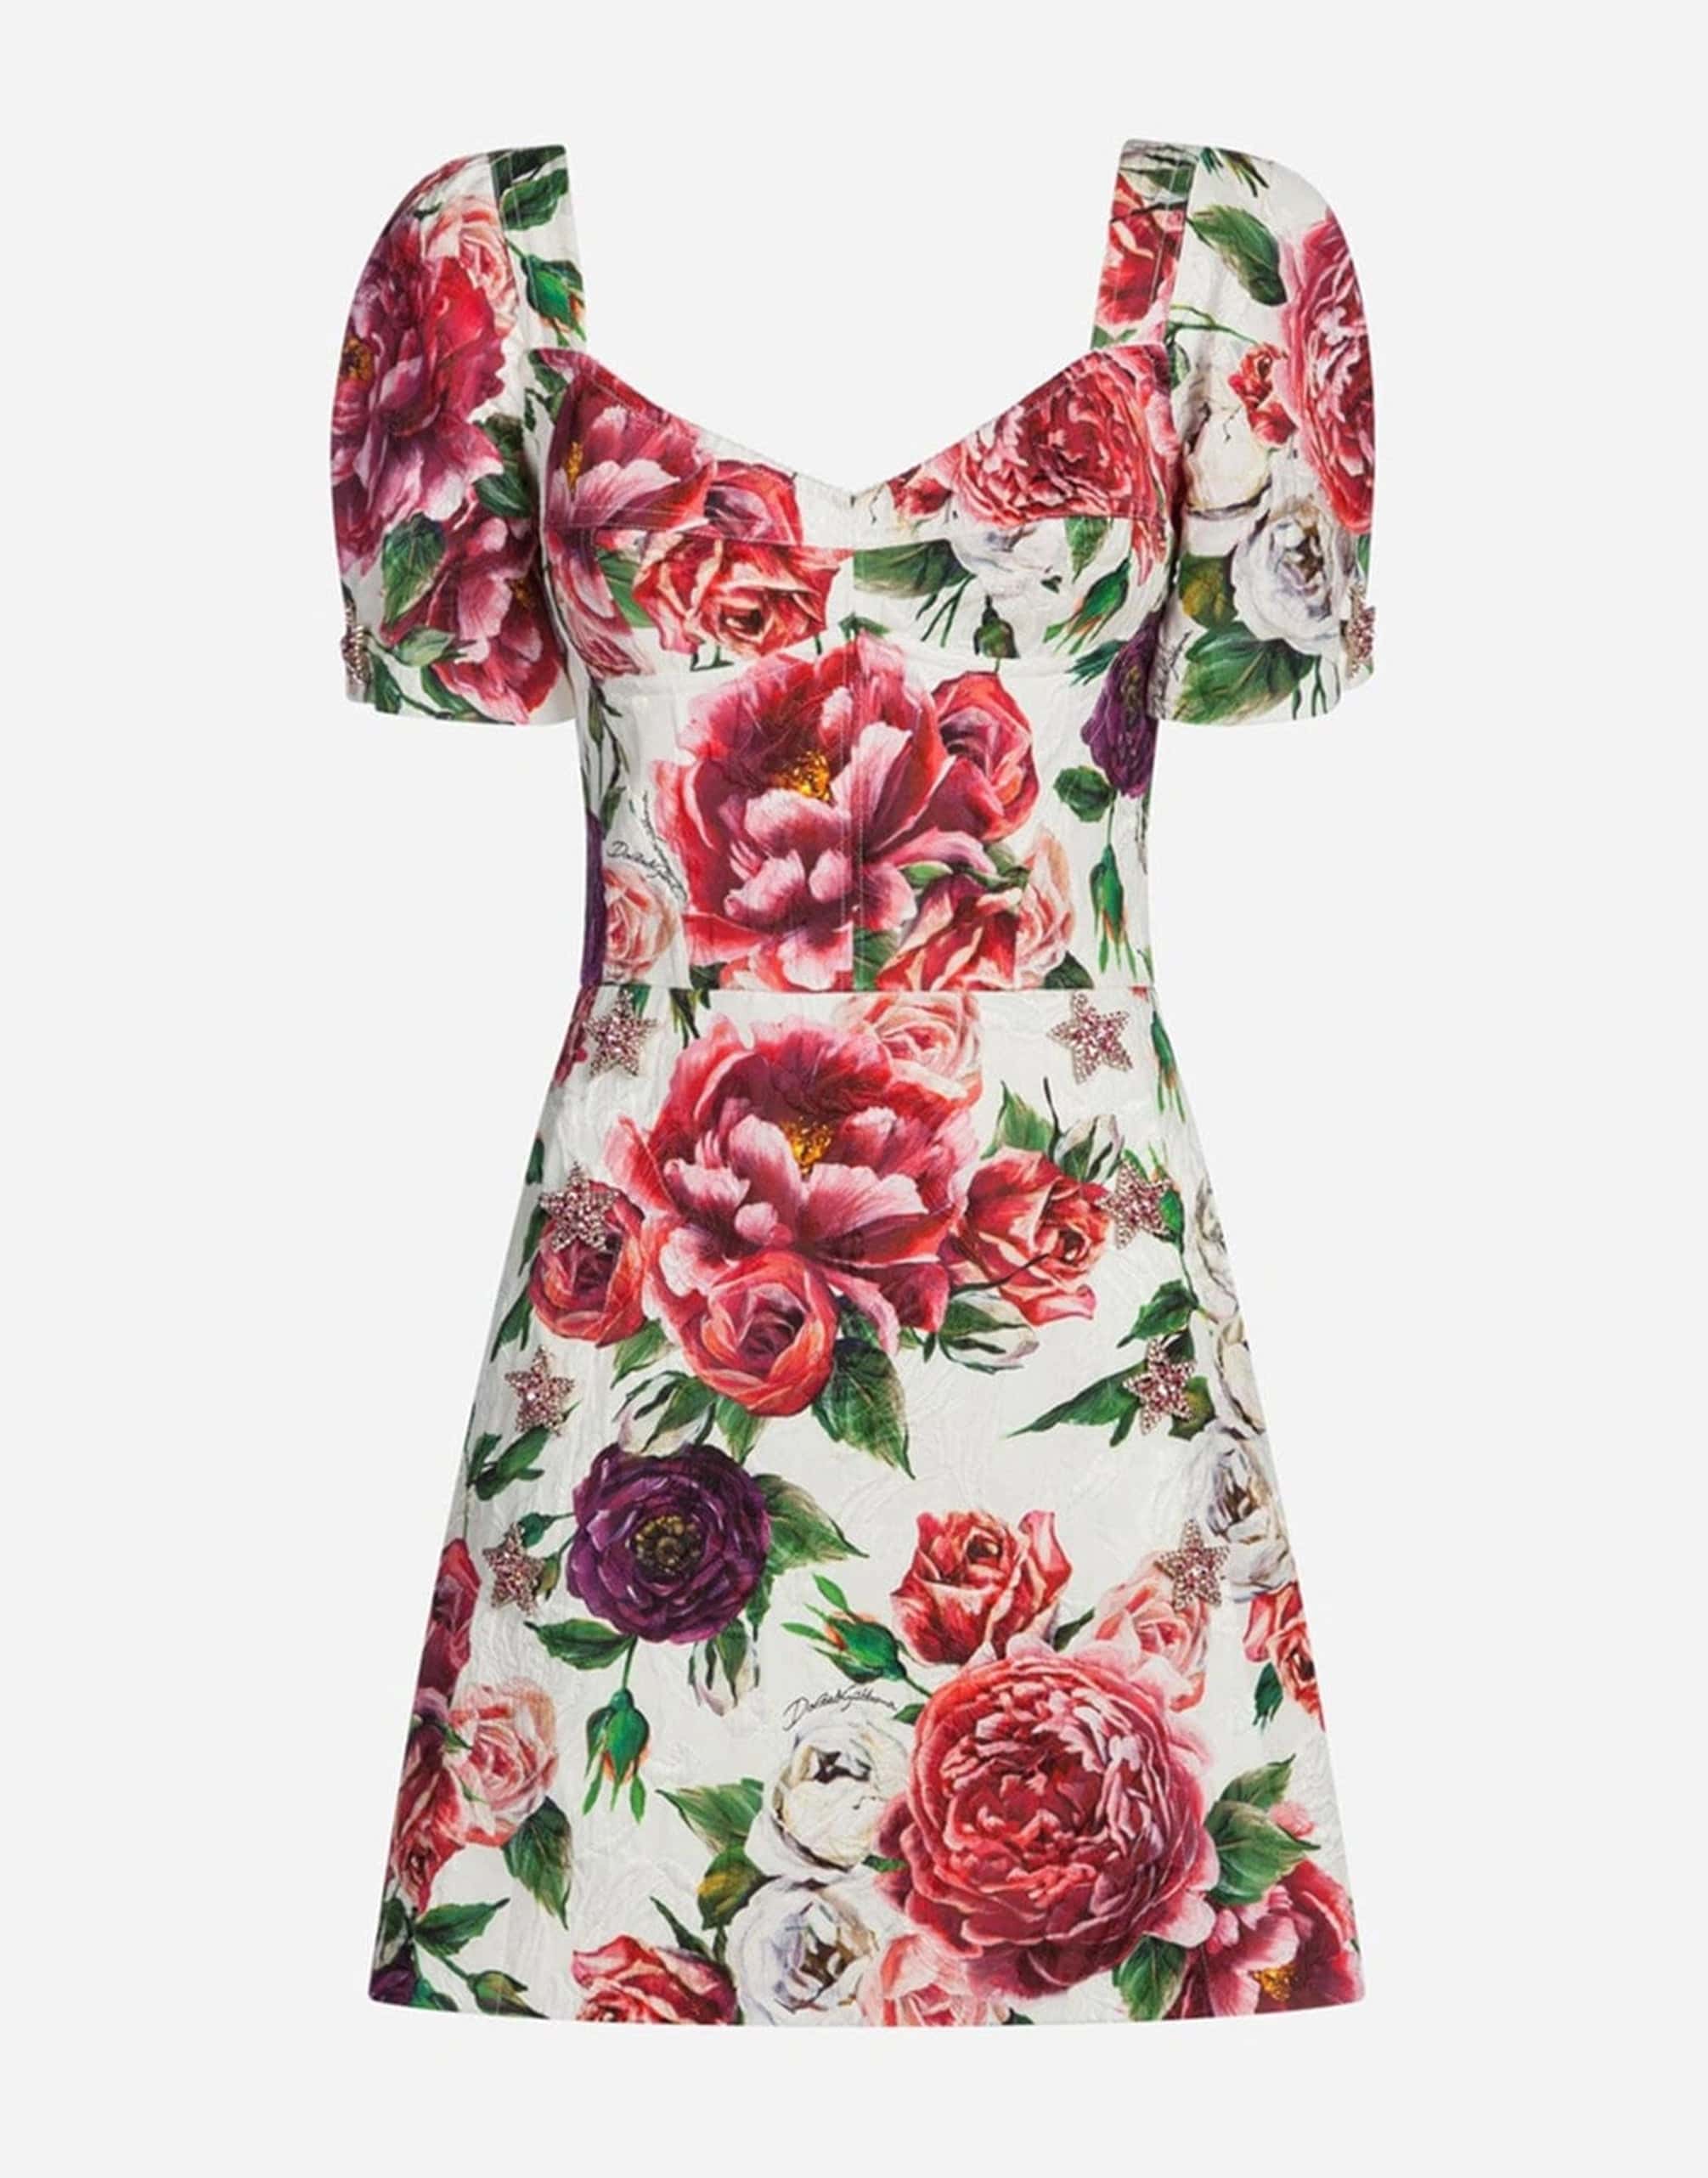 Dolce & Gabbana Peony-Print Brocade Dress